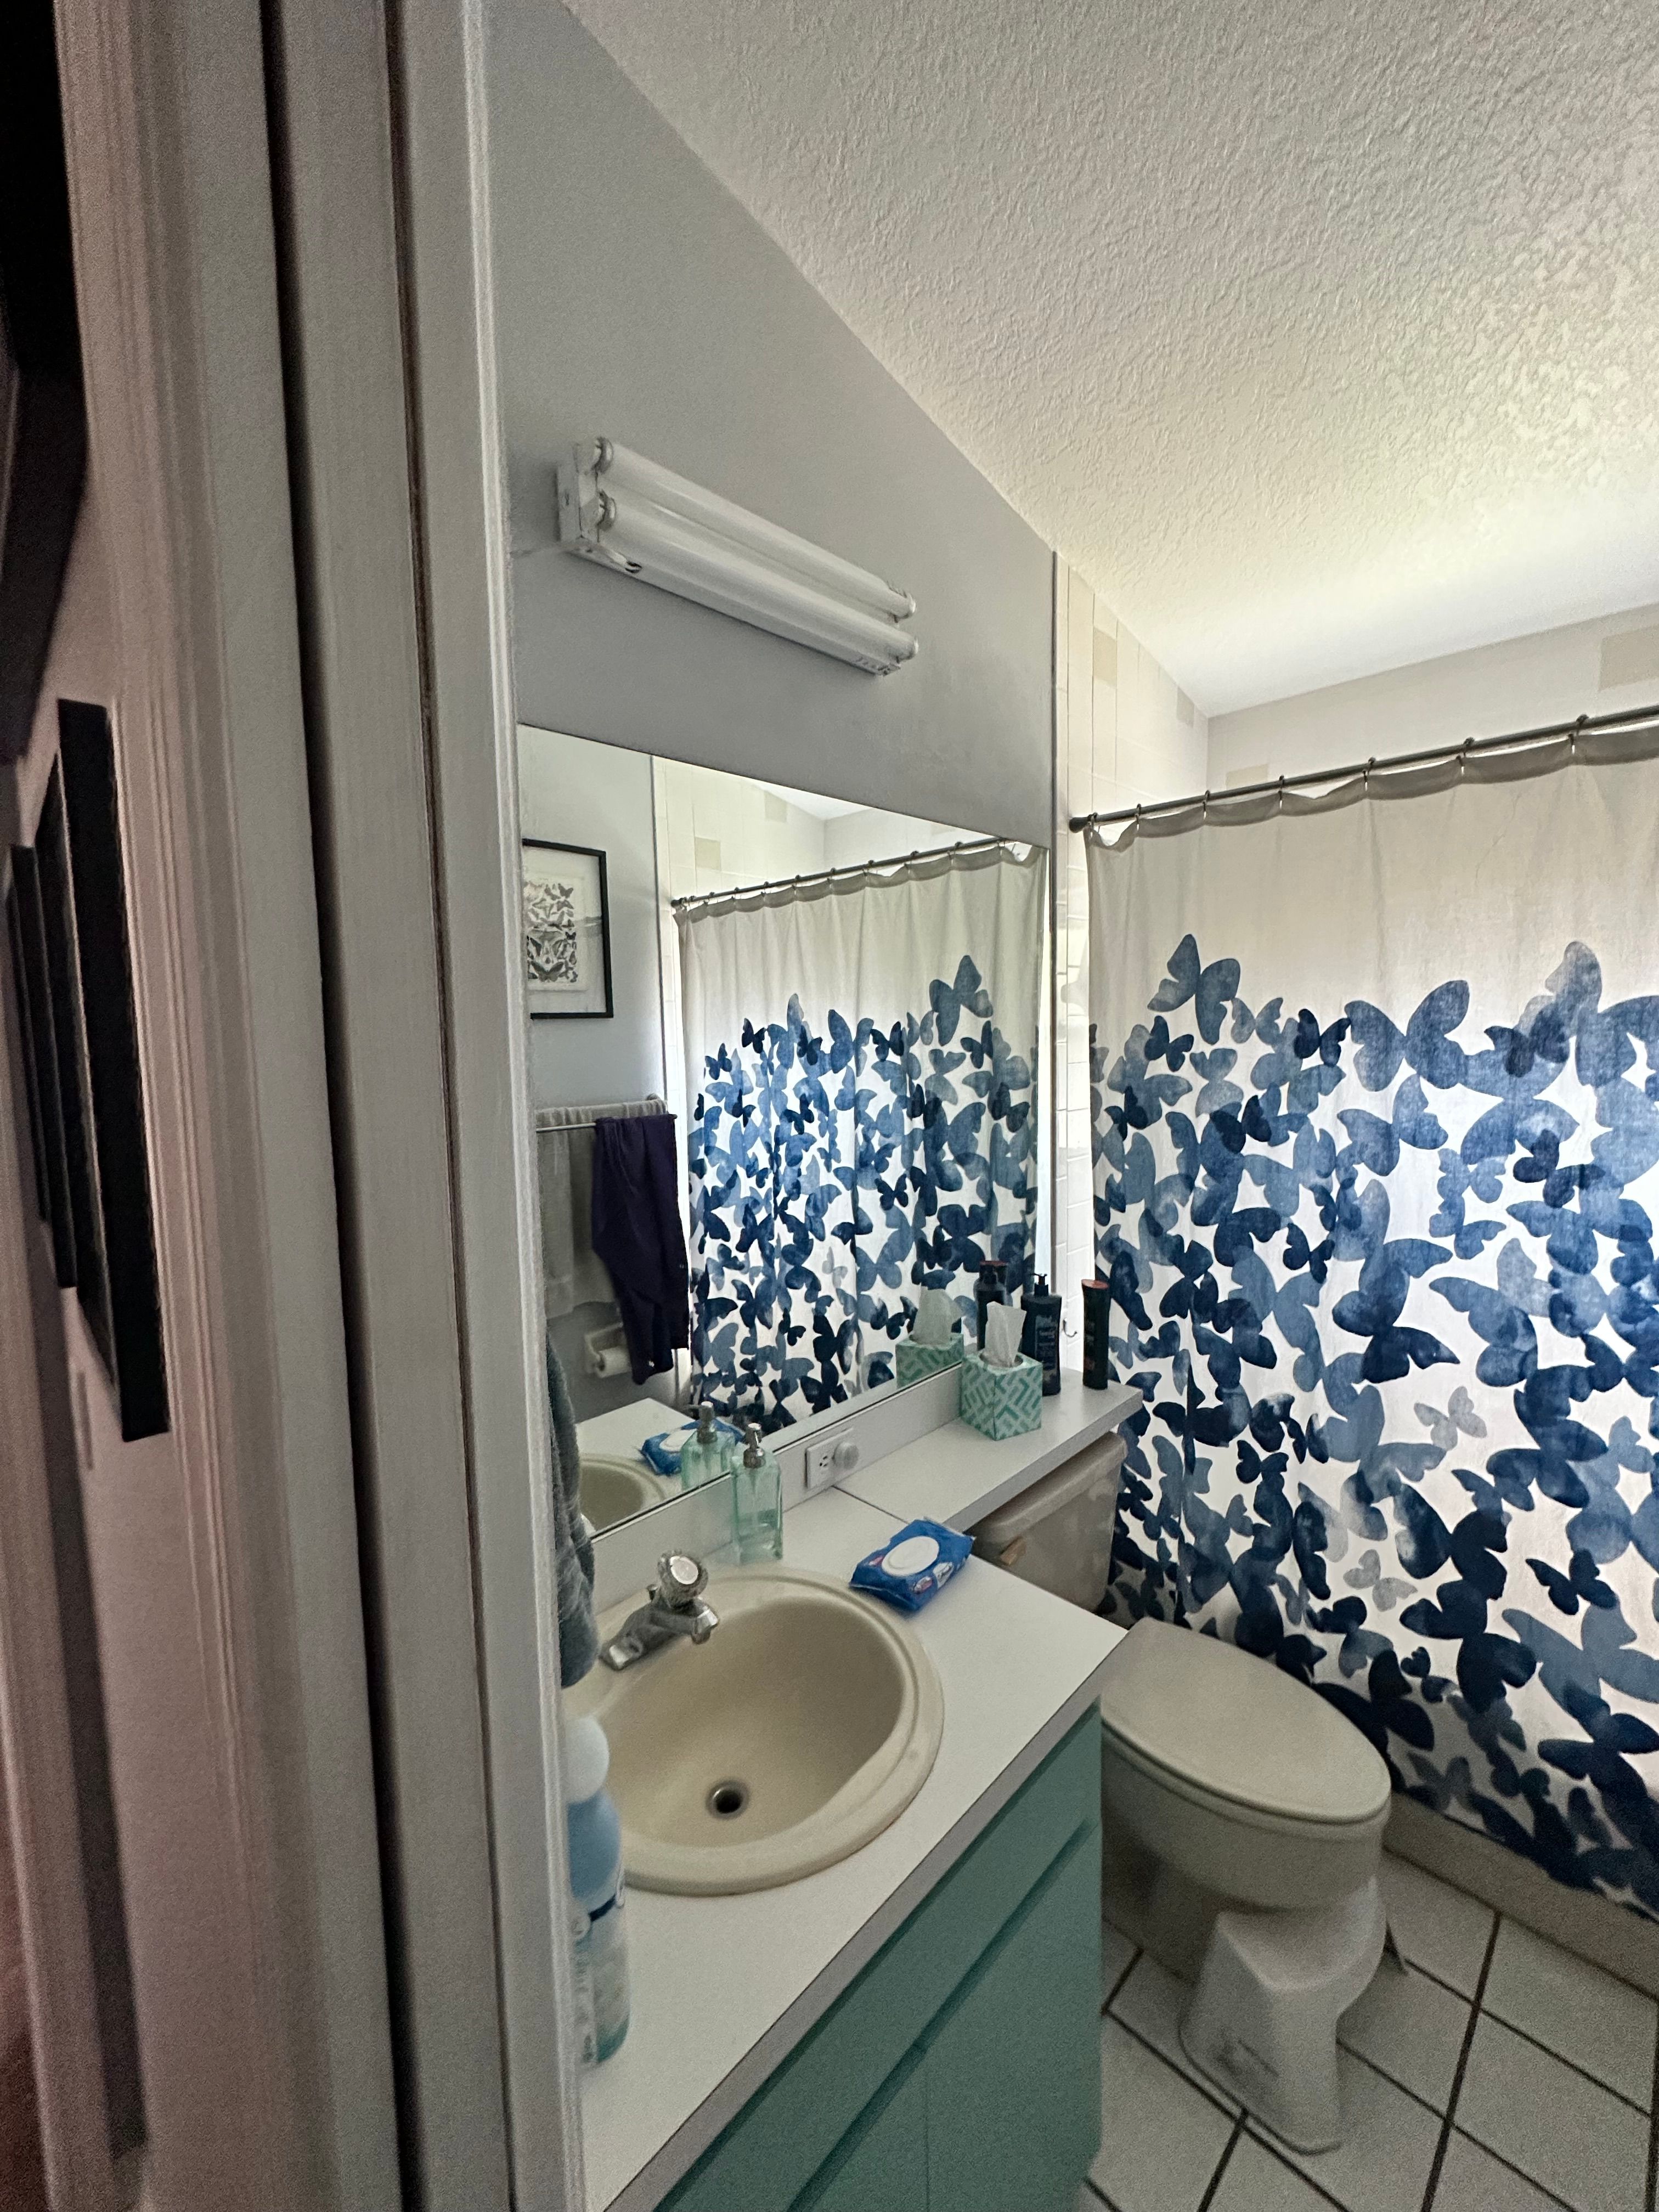 Bathroom Renovation Services for Citrus Property Maintenance in Inverness, FL